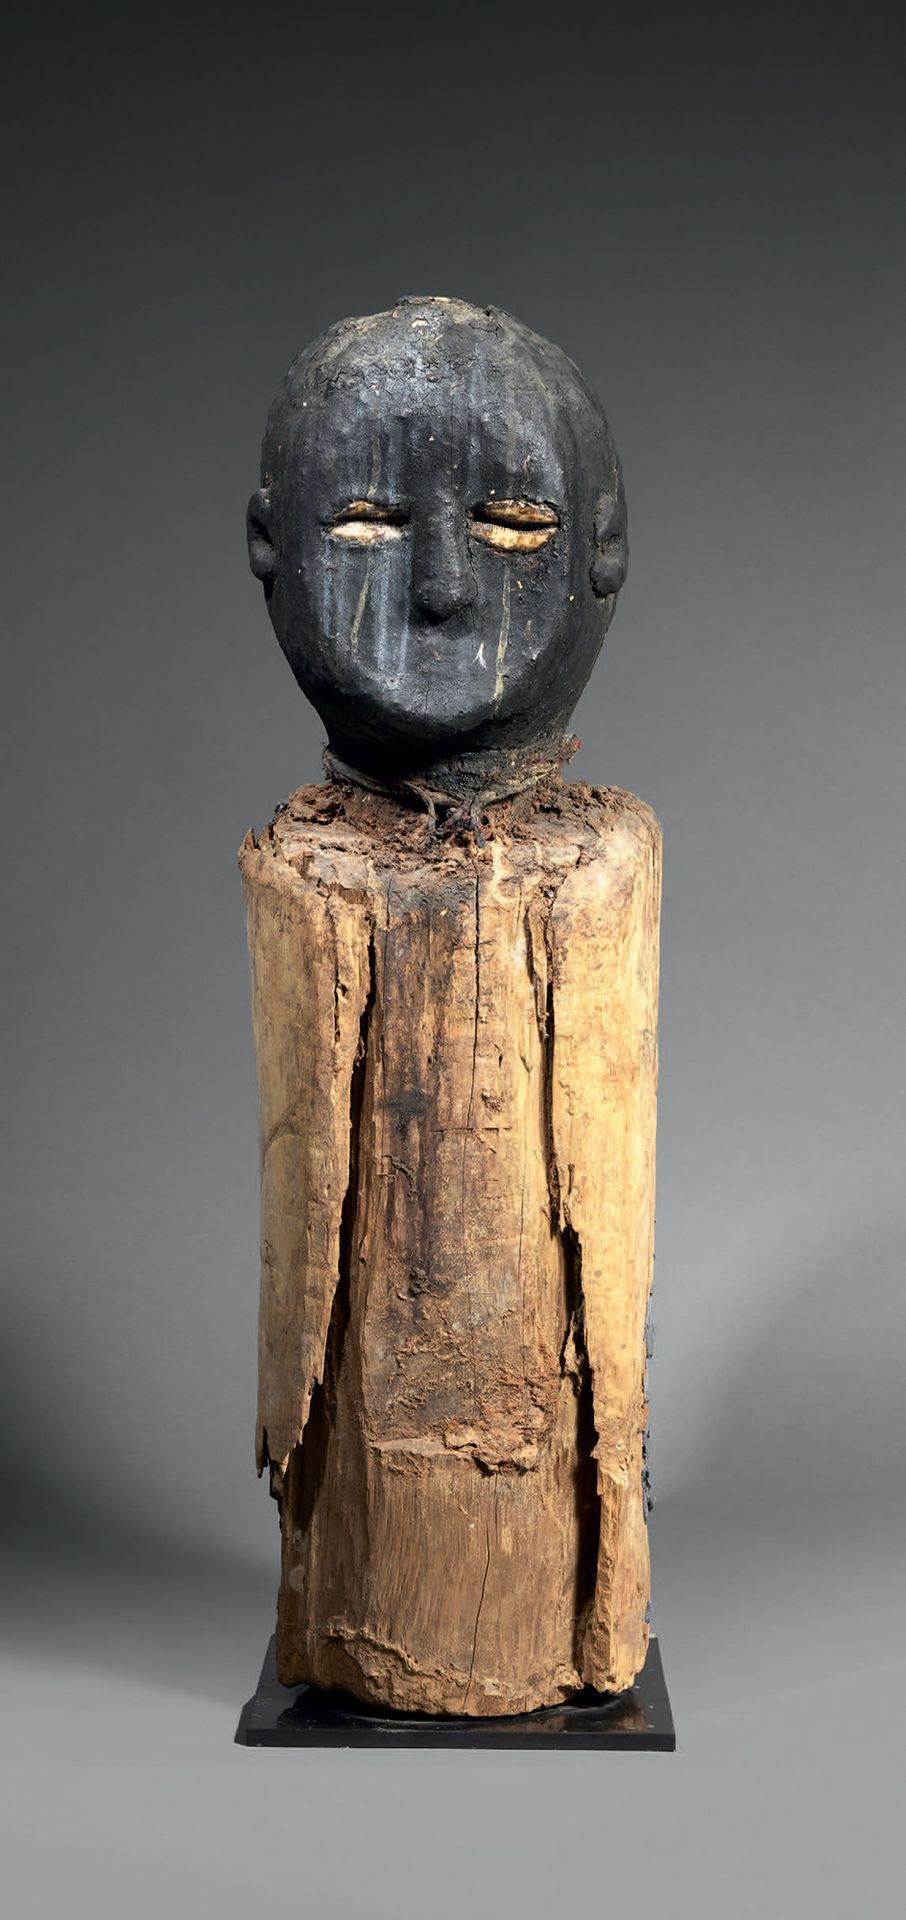 Null Busto Evhé Amedzoto
Sudeste de Togo, región de Evhé-Ouatchi
Madera, materia&hellip;